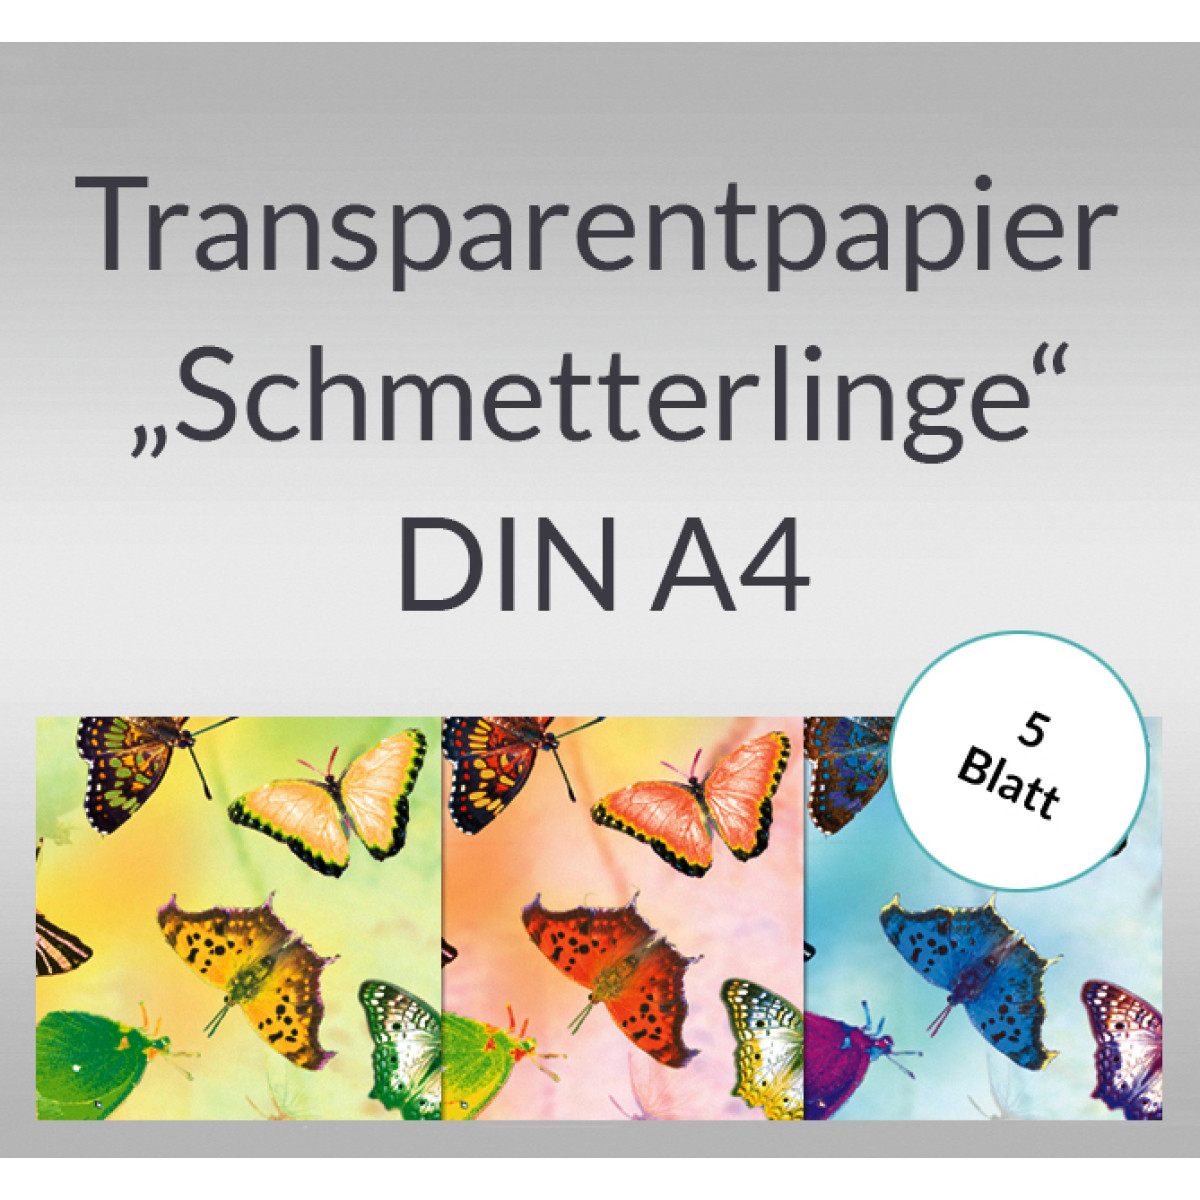 Transparentpapier "Schmetterlinge" DIN A4 - 5 Blatt